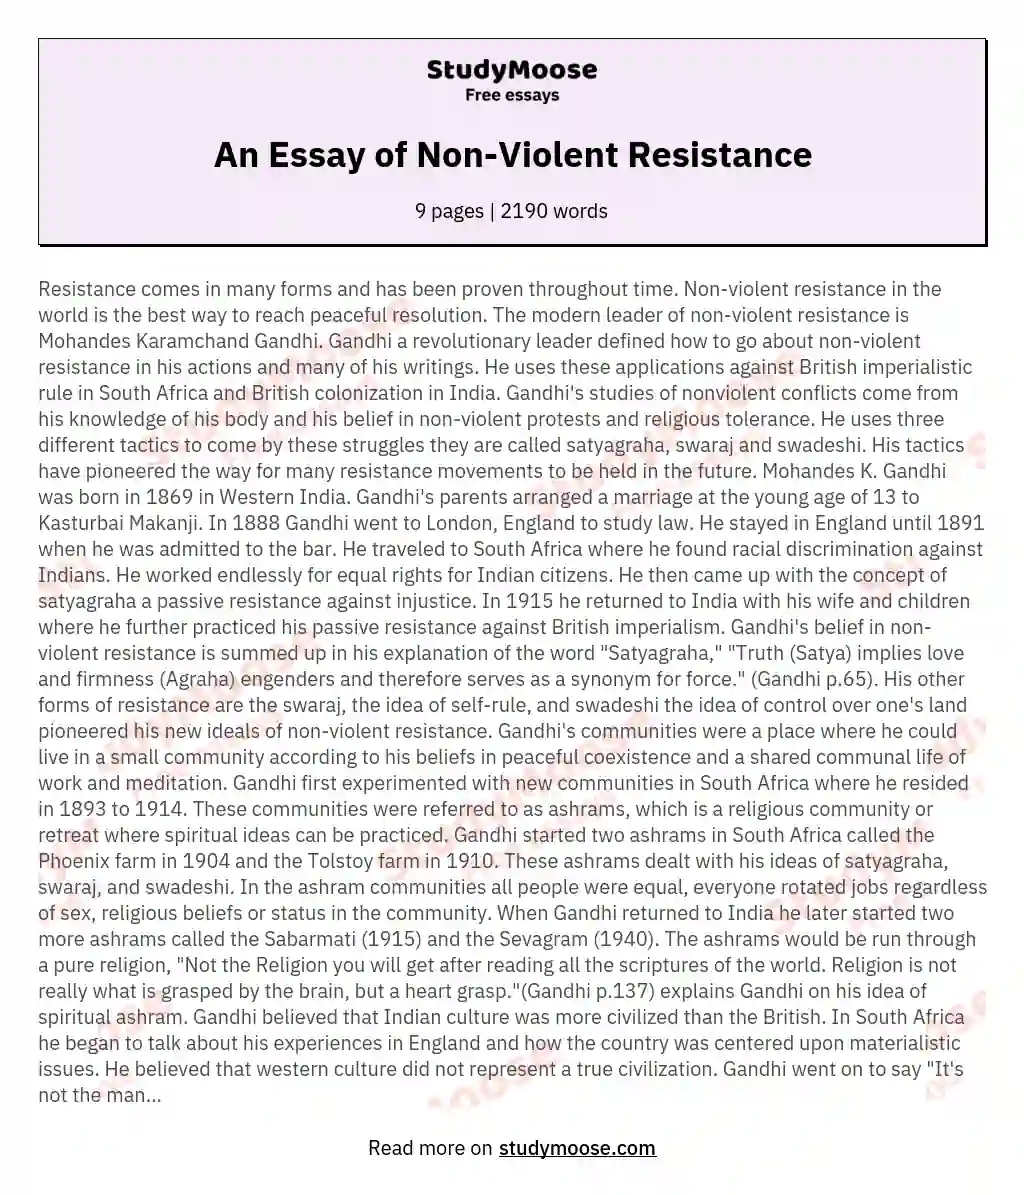 An Essay of Non-Violent Resistance essay